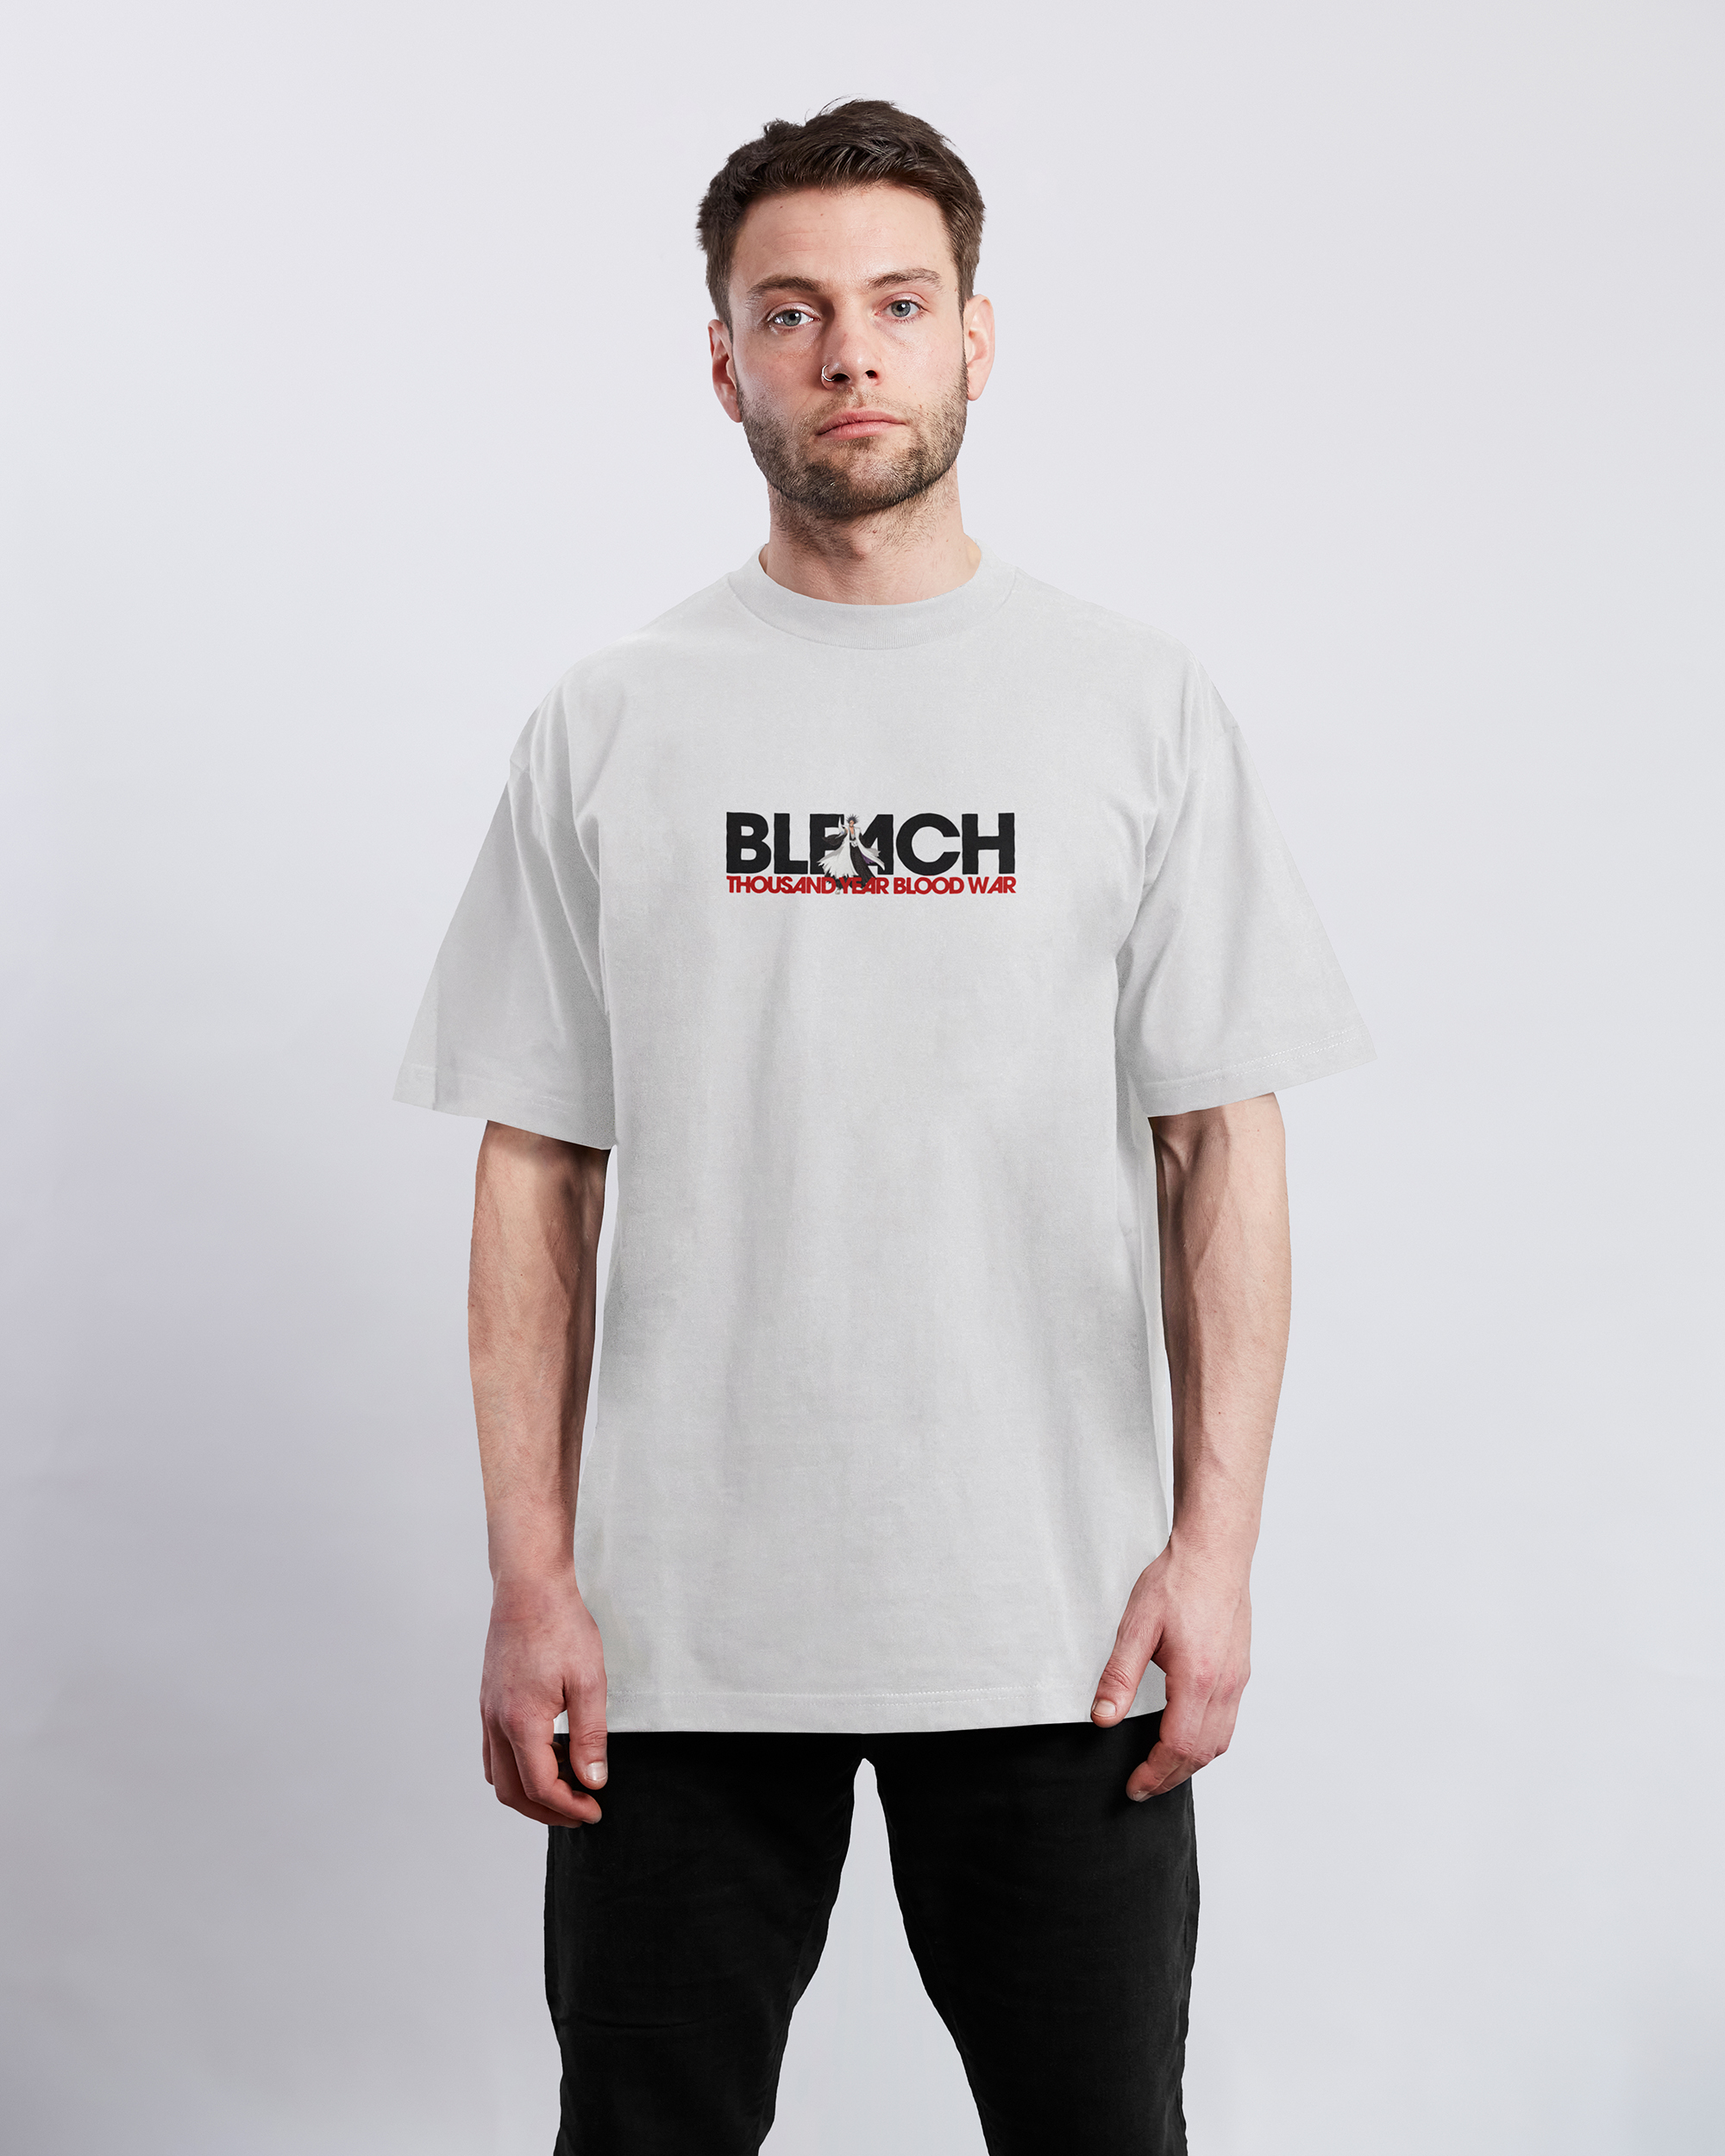 Kenpachi Zaraki Bleach | White T-Shirt TYBW